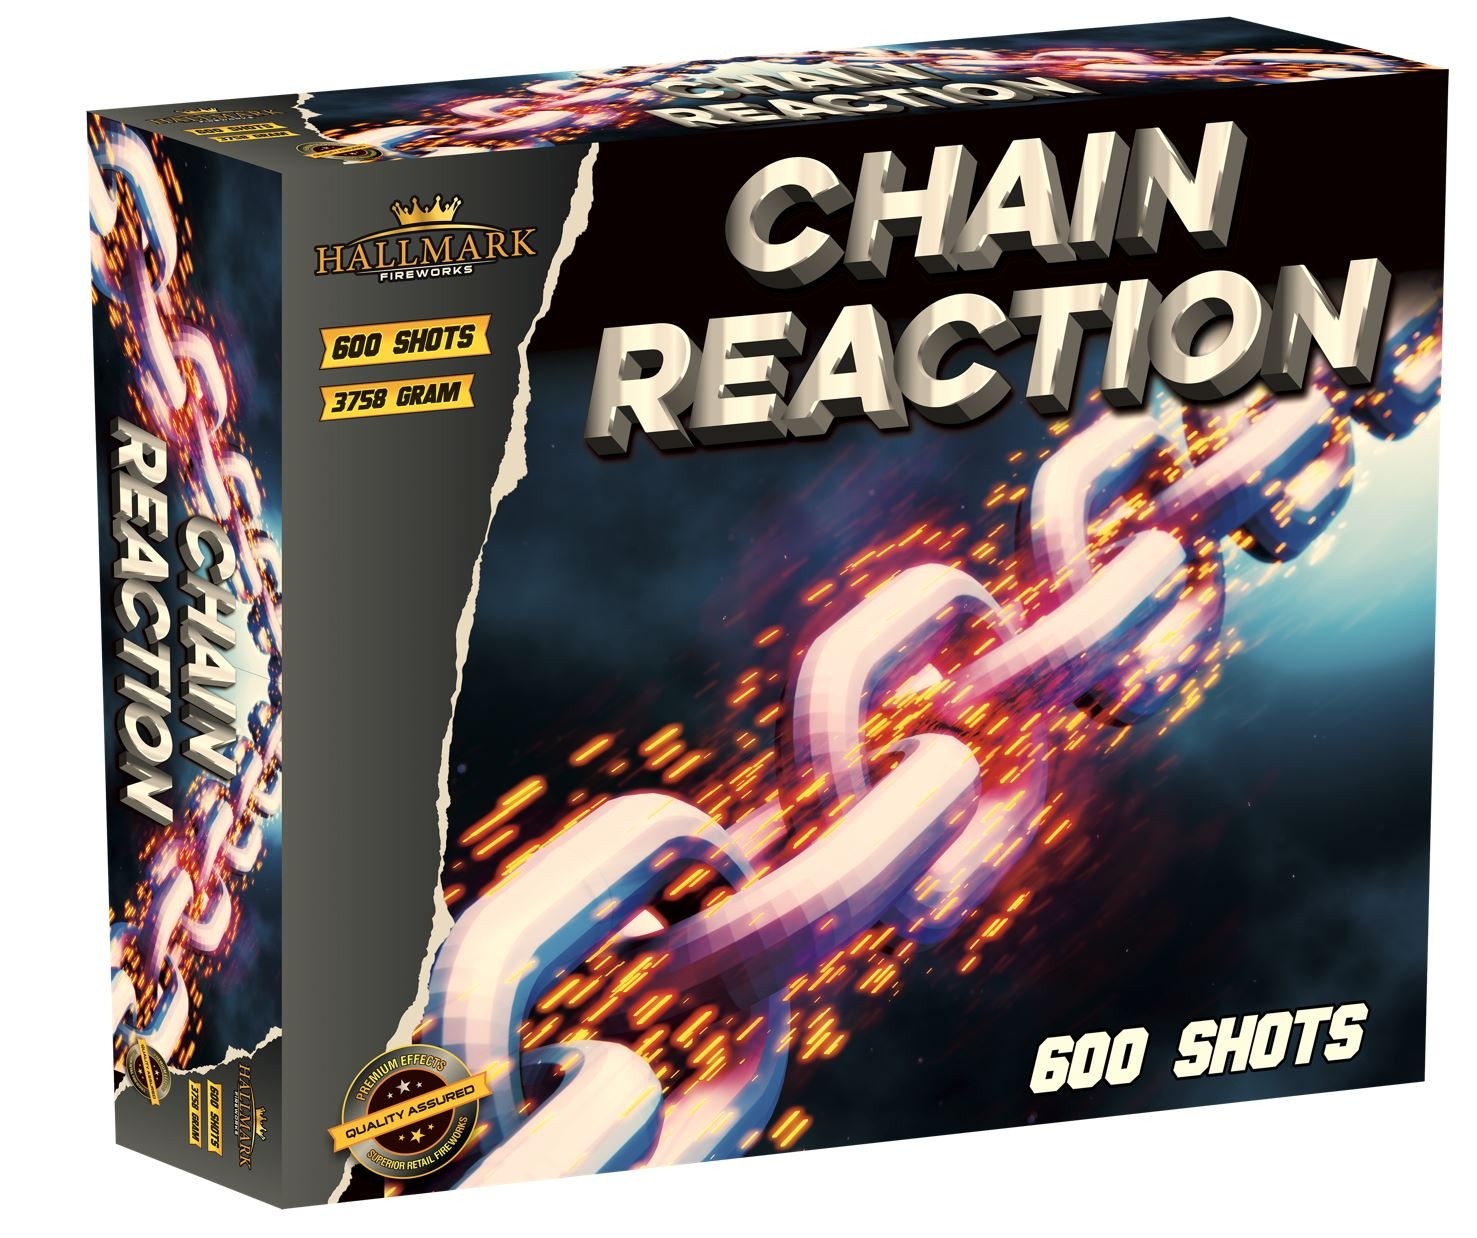 Chain Reaction massive saving £129.99